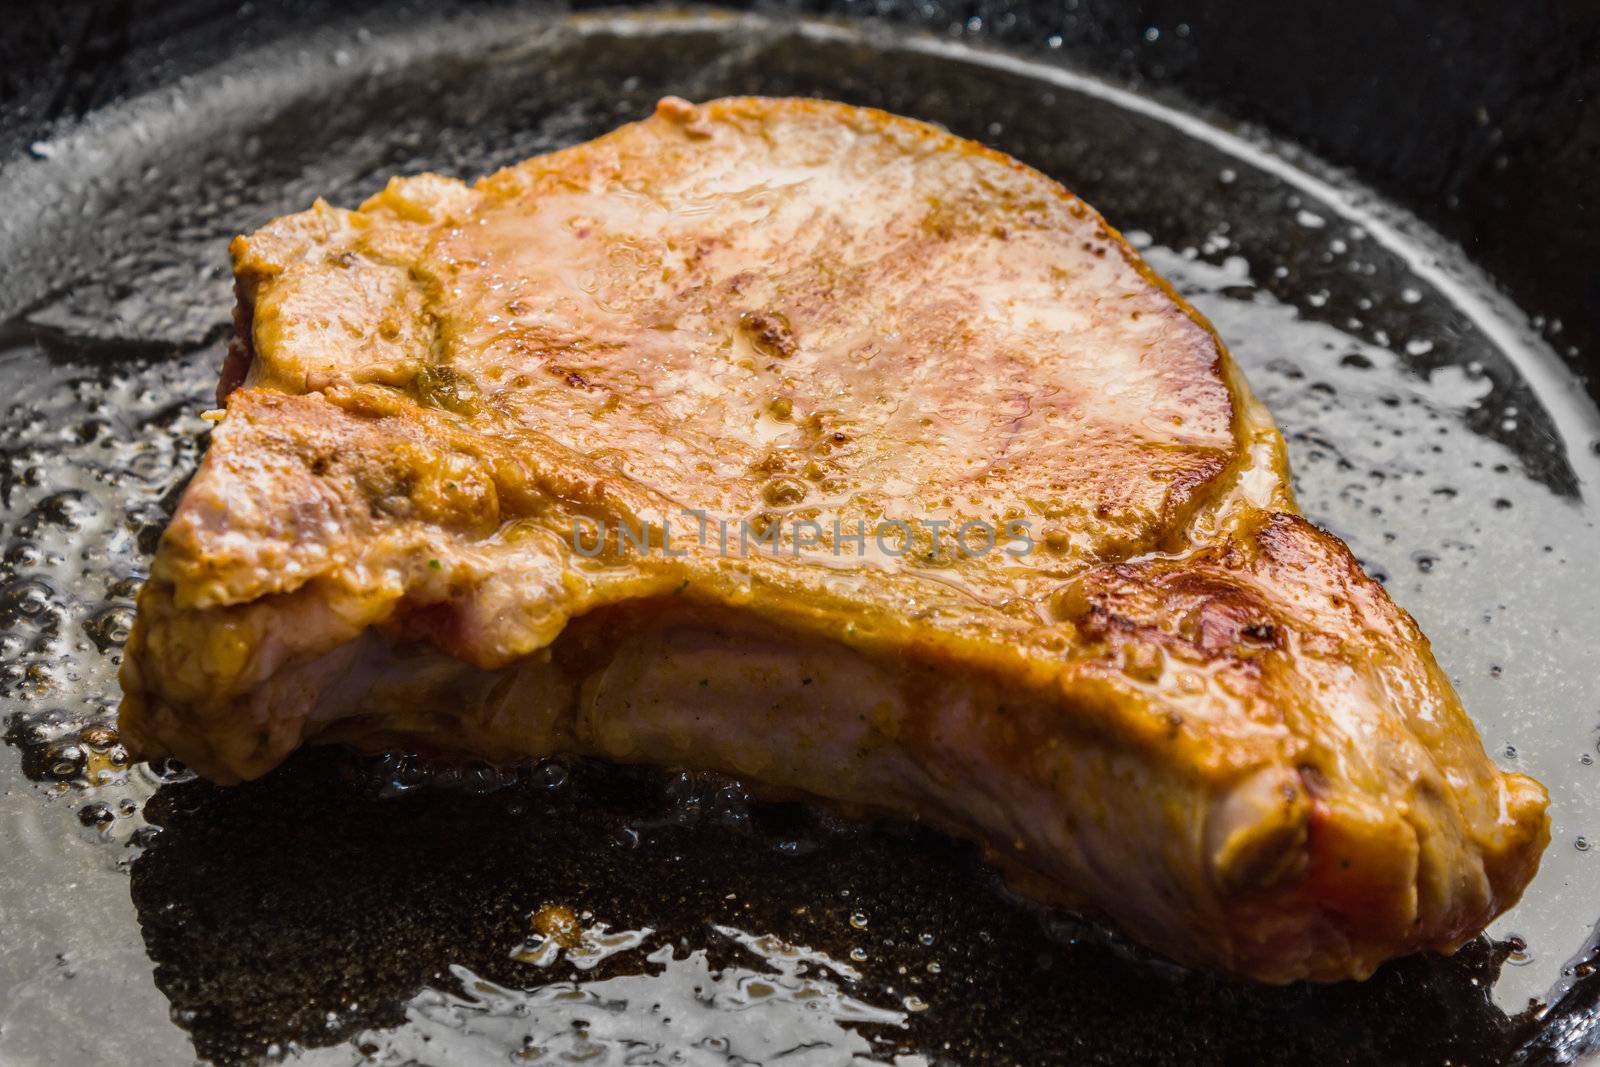 Roasted pork steak in a frying pan